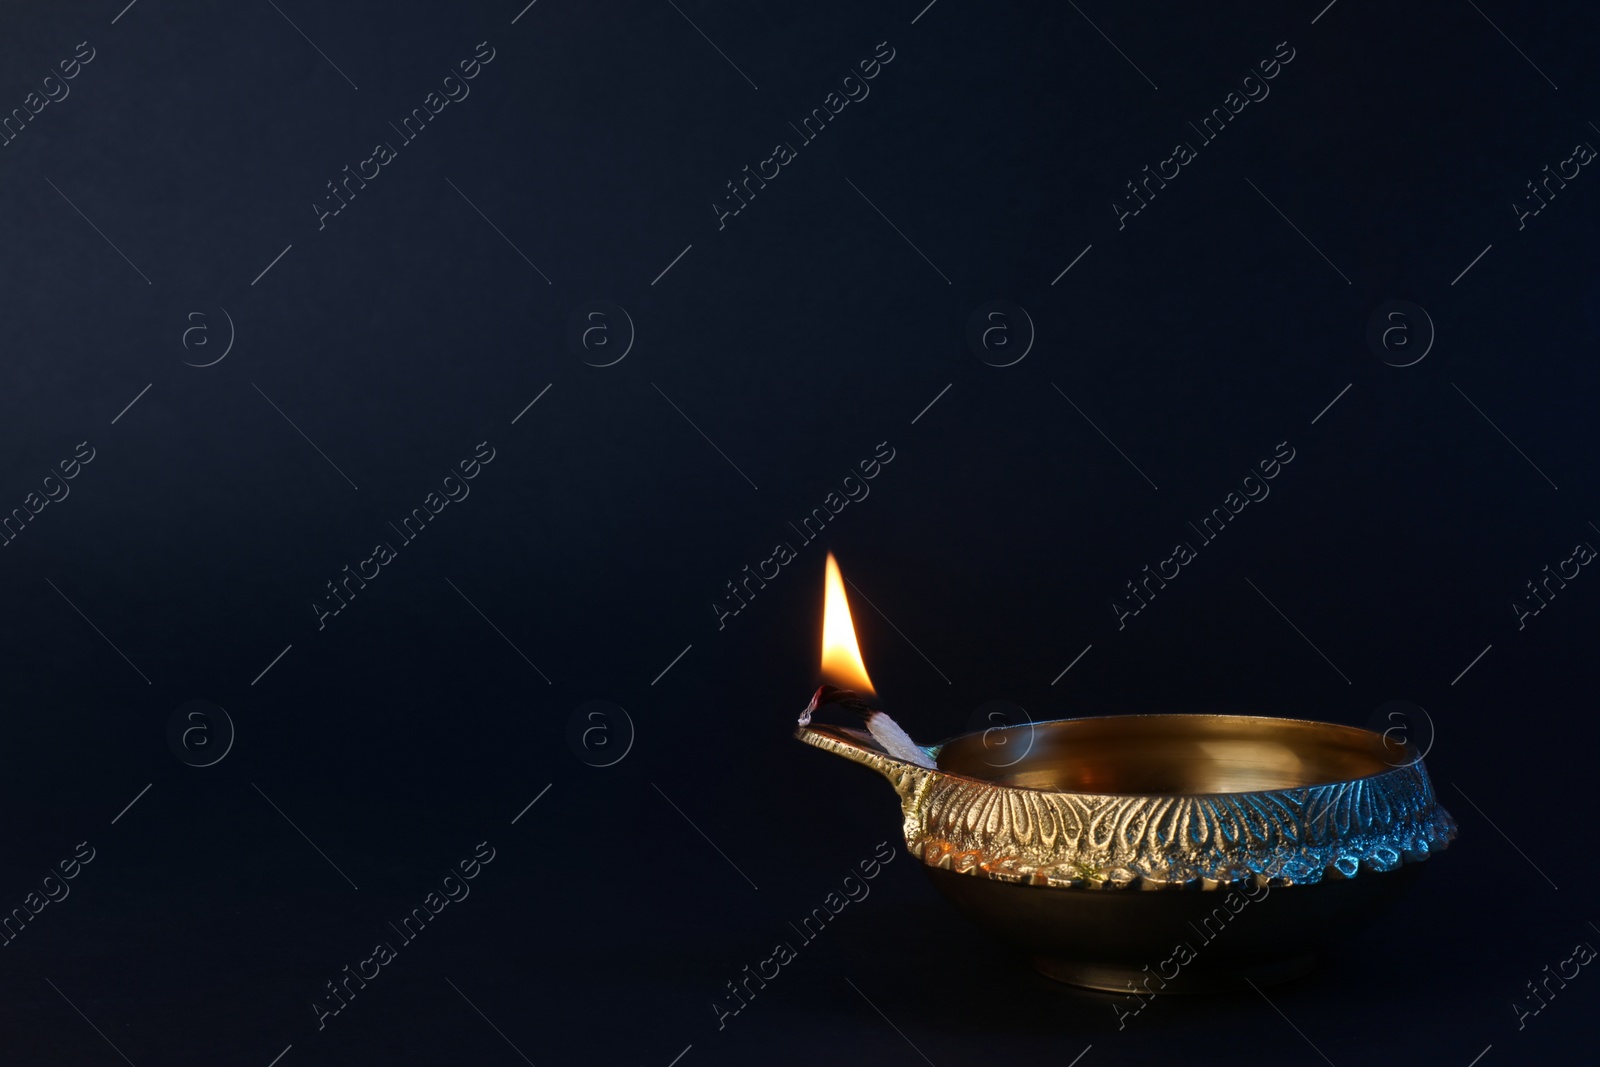 Photo of Lit diya lamp on black background, space for text. Diwali celebration